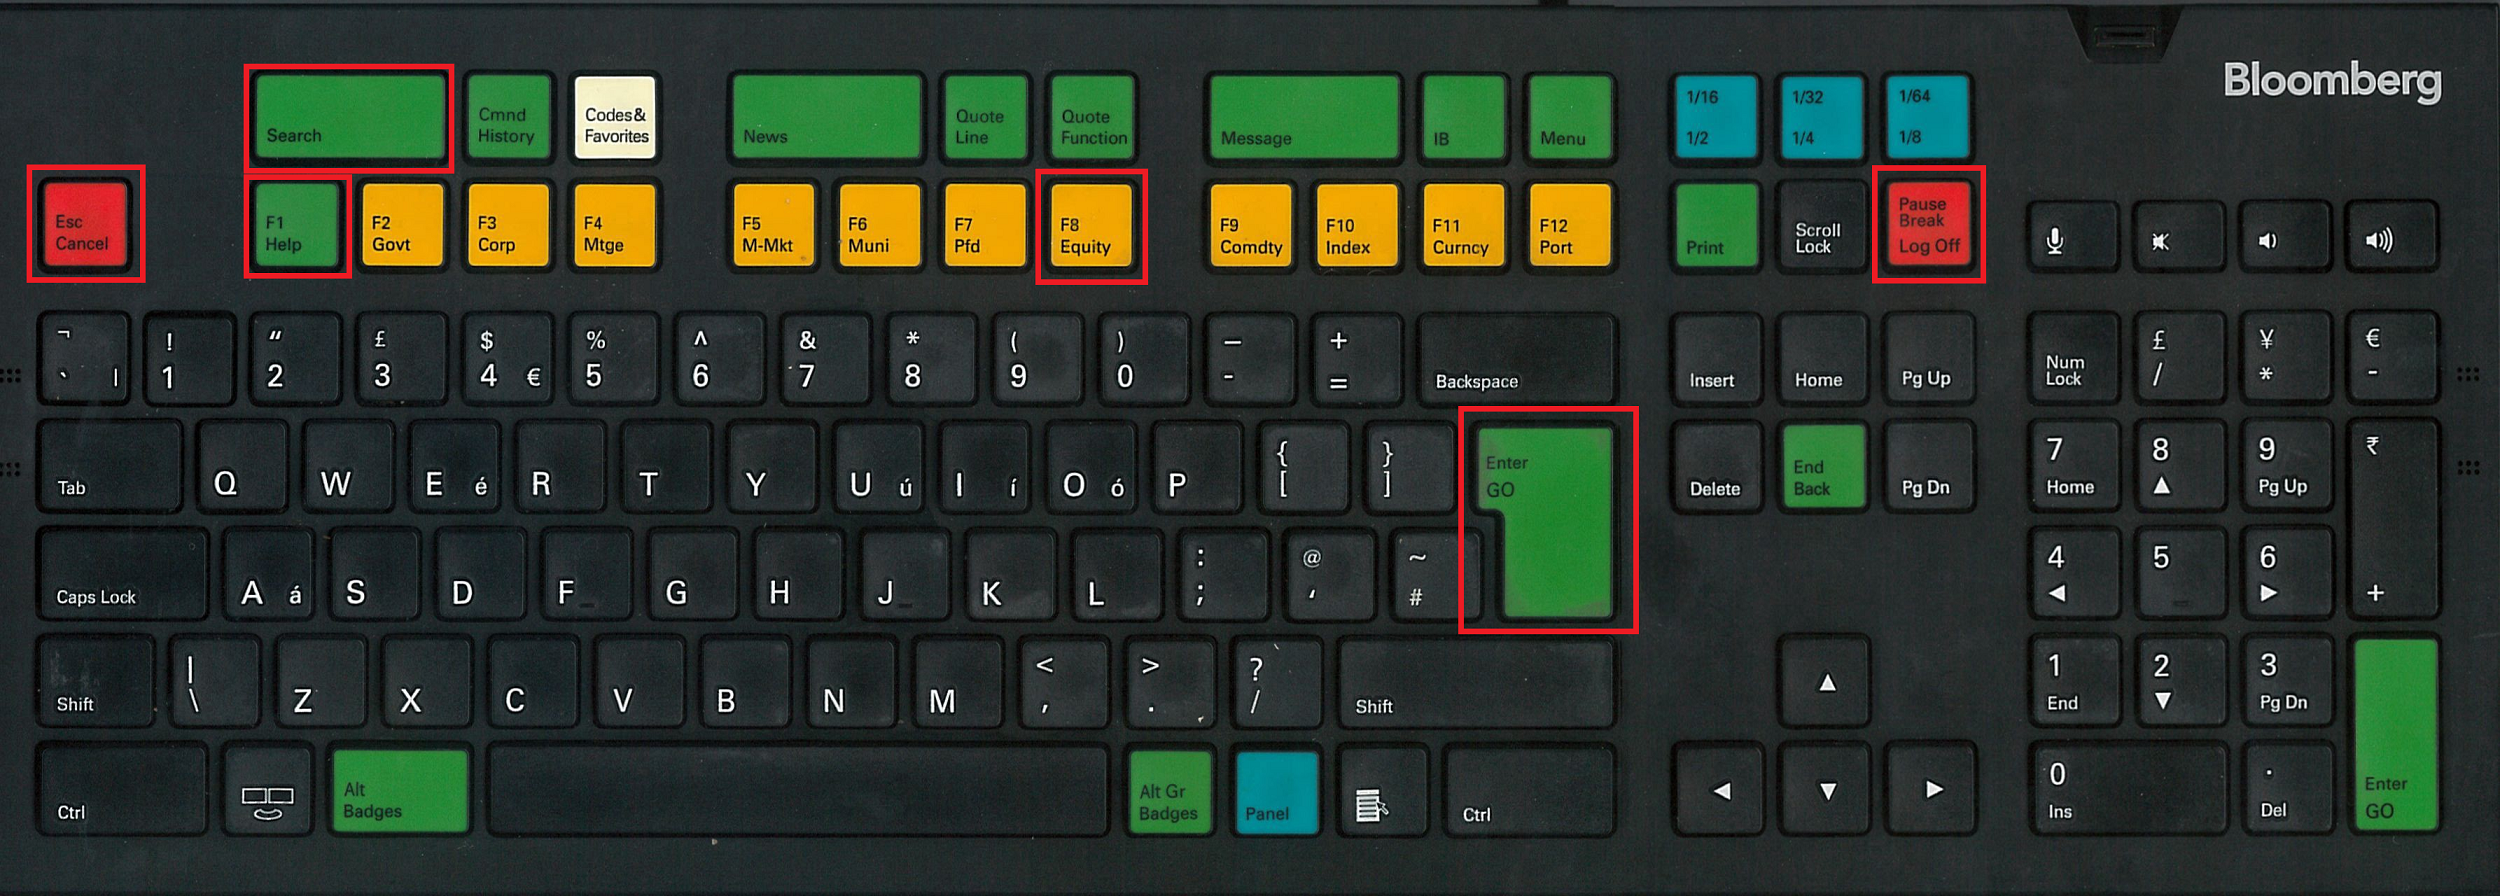 Bloomberg Keyboard